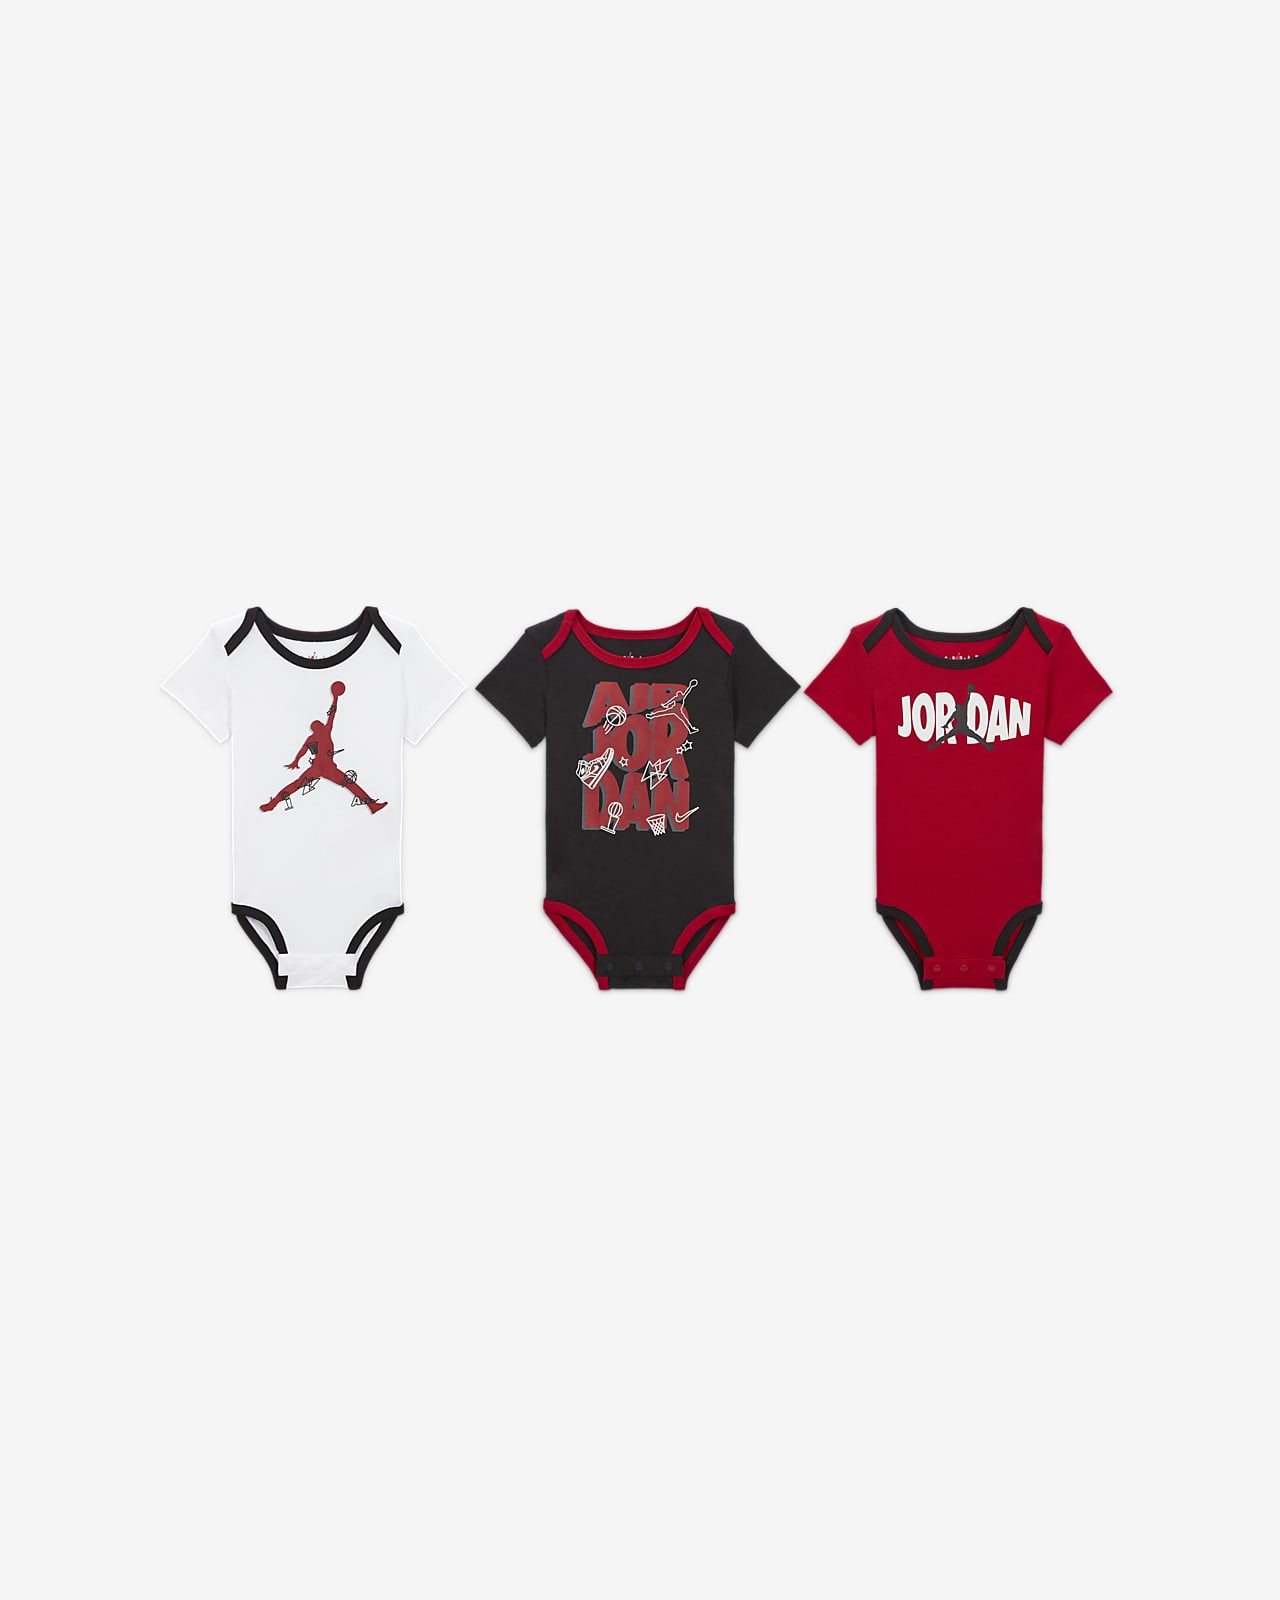 Resistent Huichelaar veeg Jordan Playground Bodysuit 3-Pack Set Baby Set. Nike.com